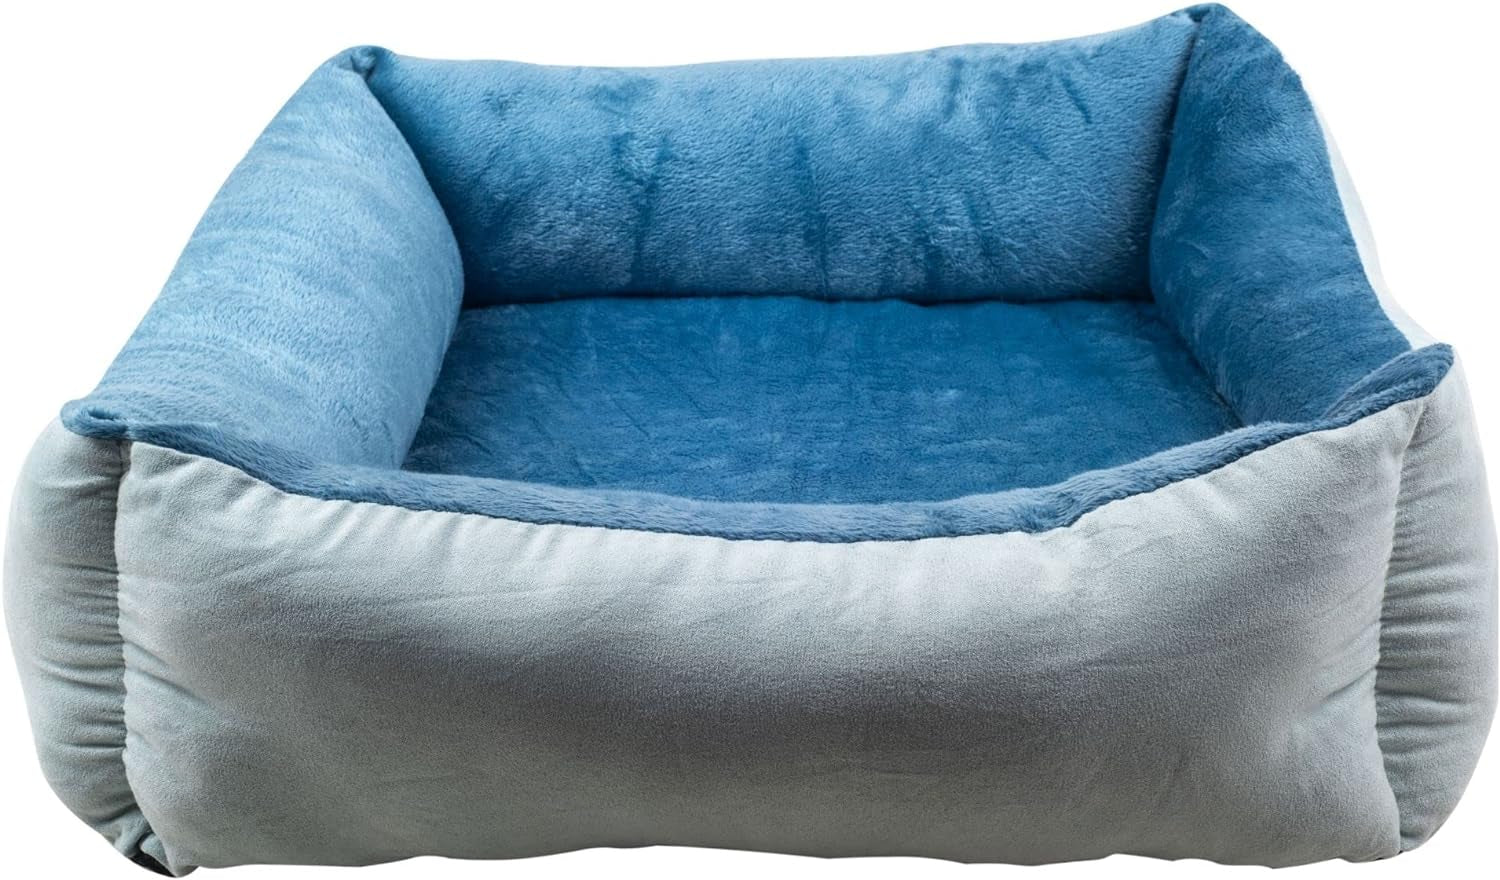 Rectangle Bolster Pet Bed, Dog Bed Medium Size